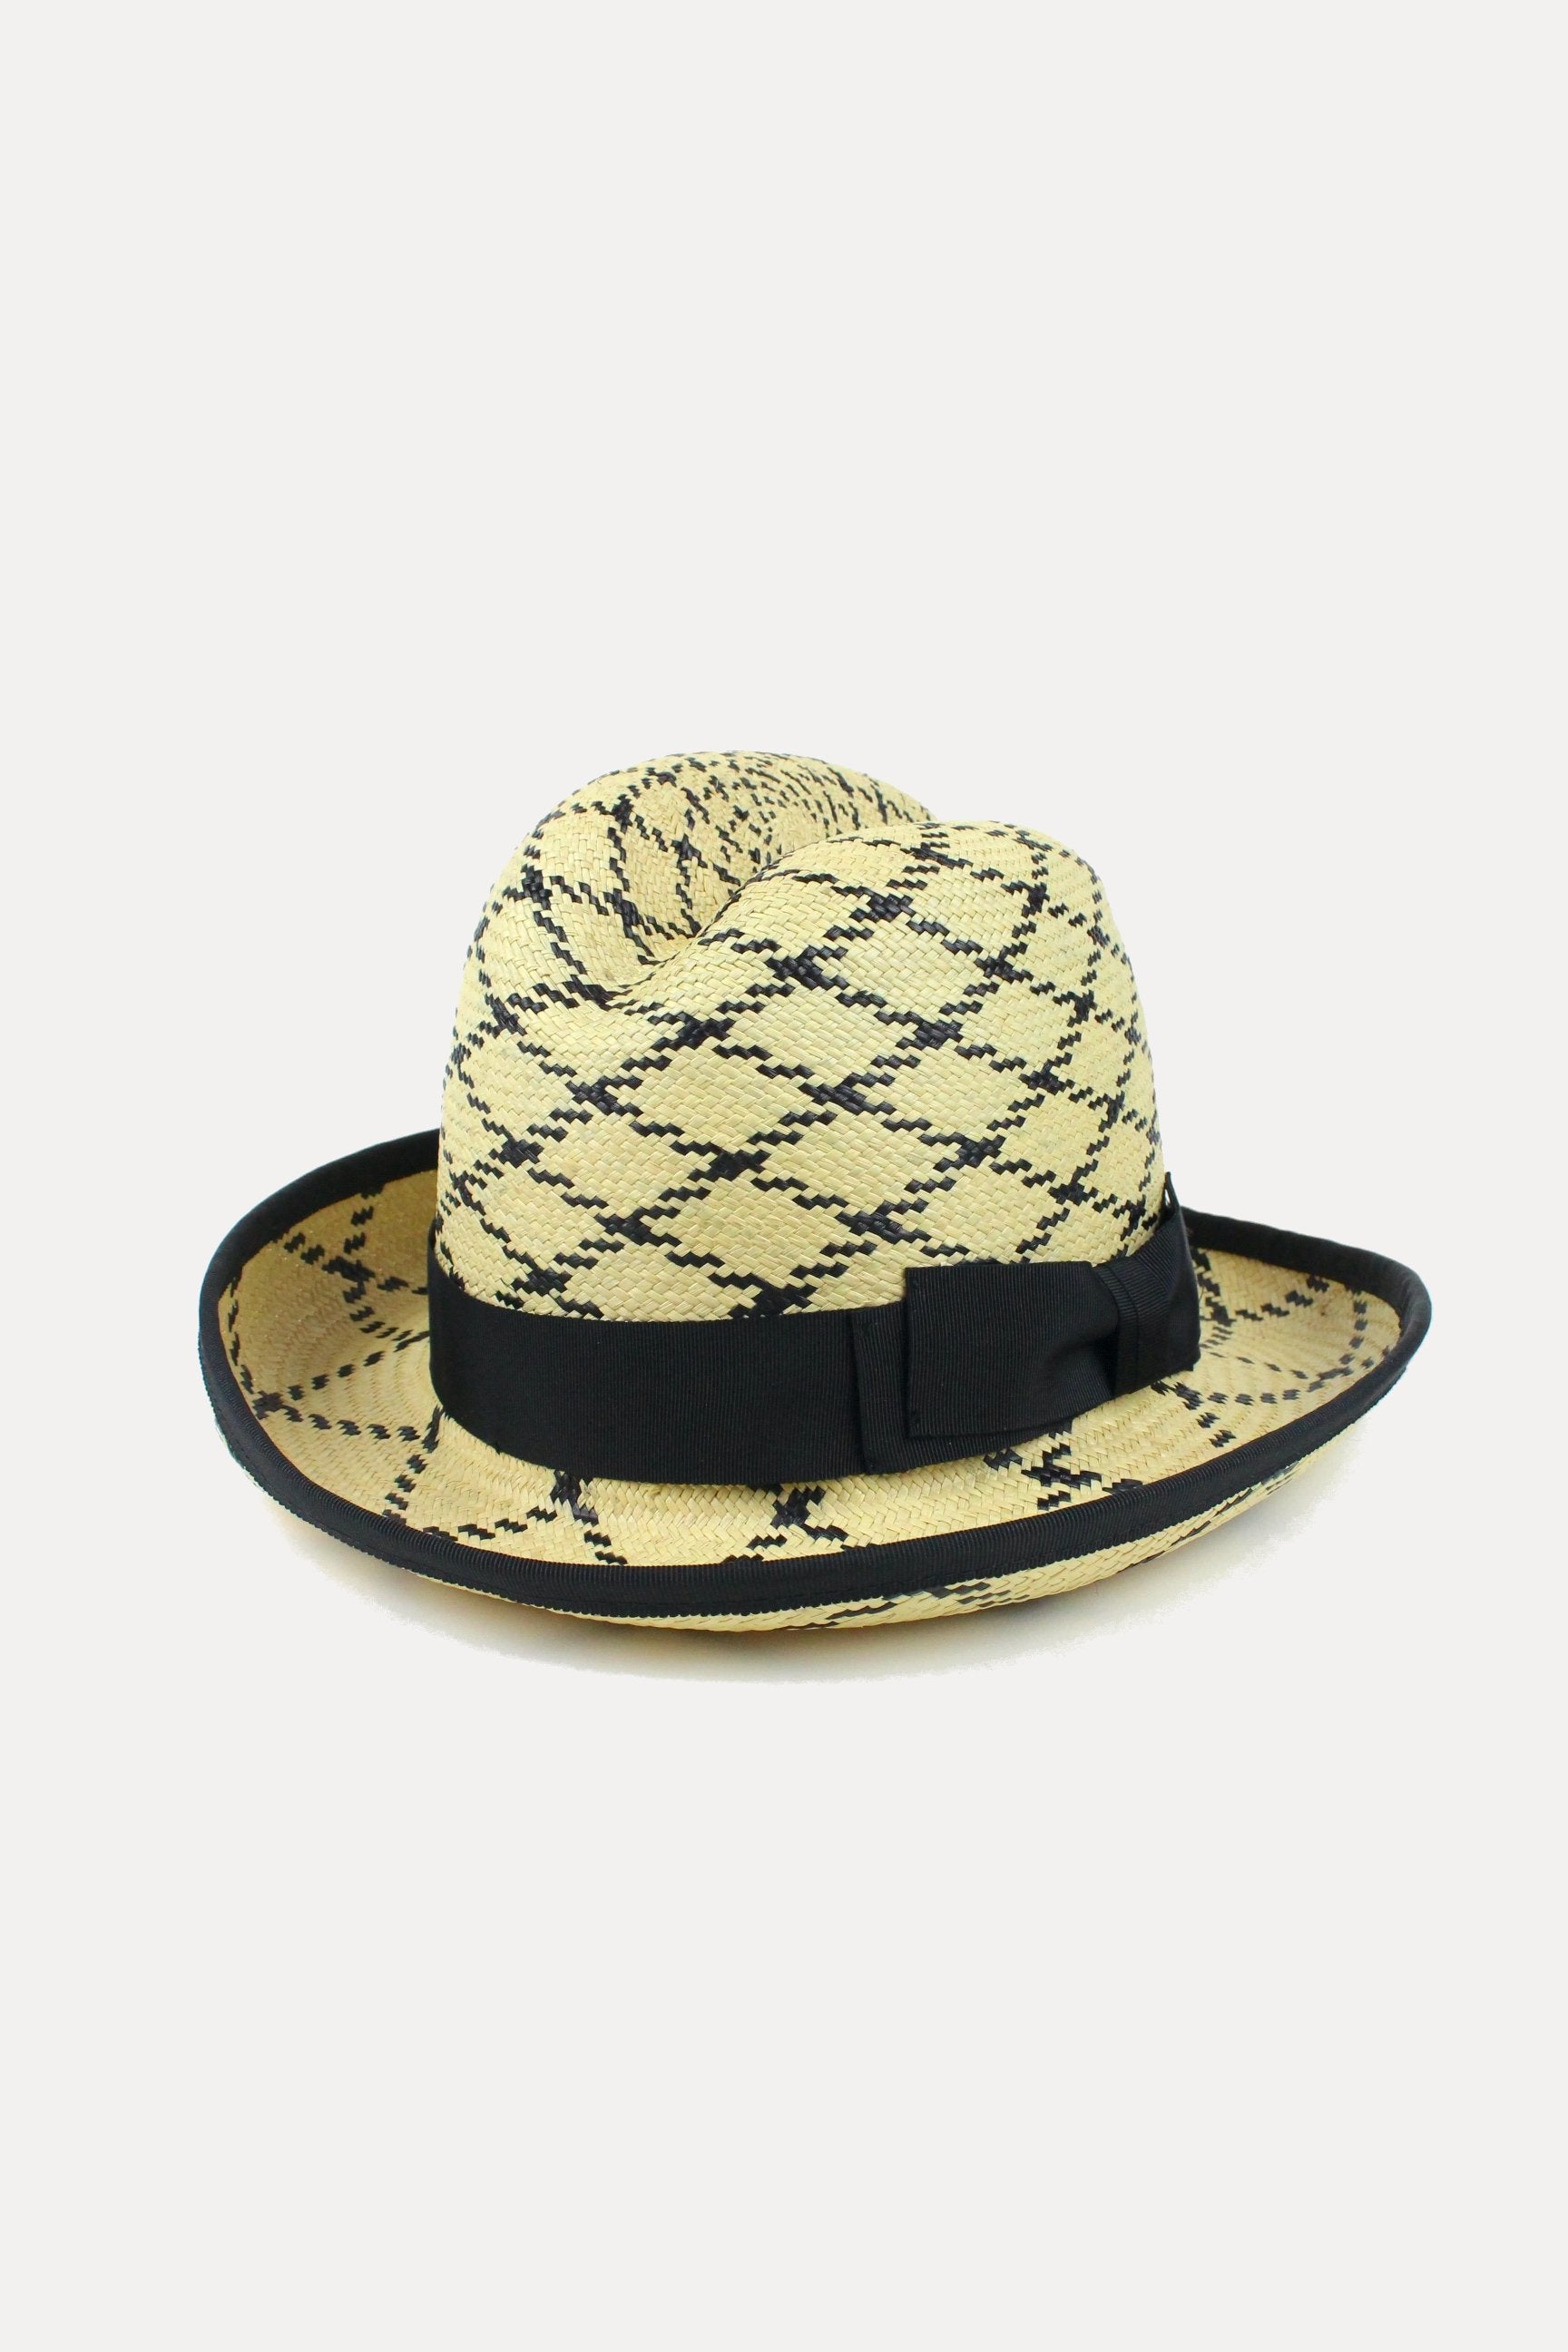 PANAMA FLASH TIPPER - CLASSIC TWIST-hats-A Child Of The Jago